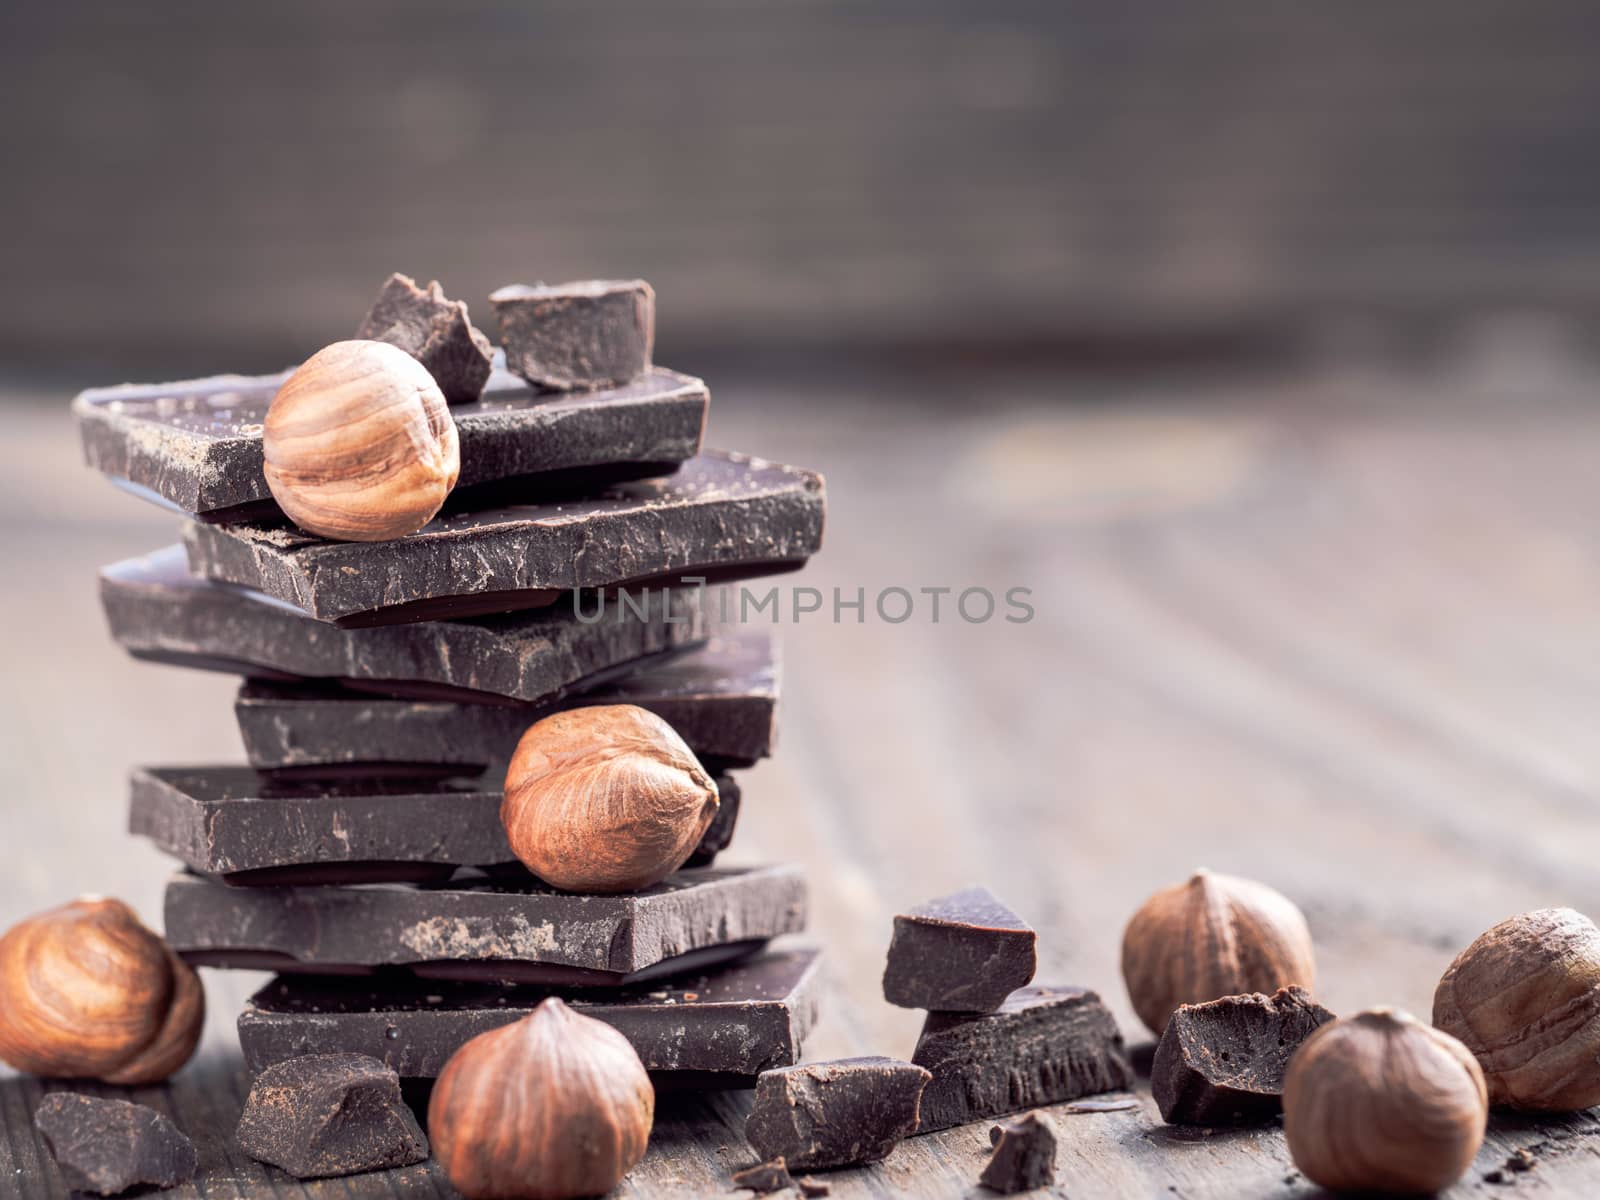 Stack of dark chocolate and whole hazelnut with copy space. Chocolate with crumbs and hazelnuts on wooden background.